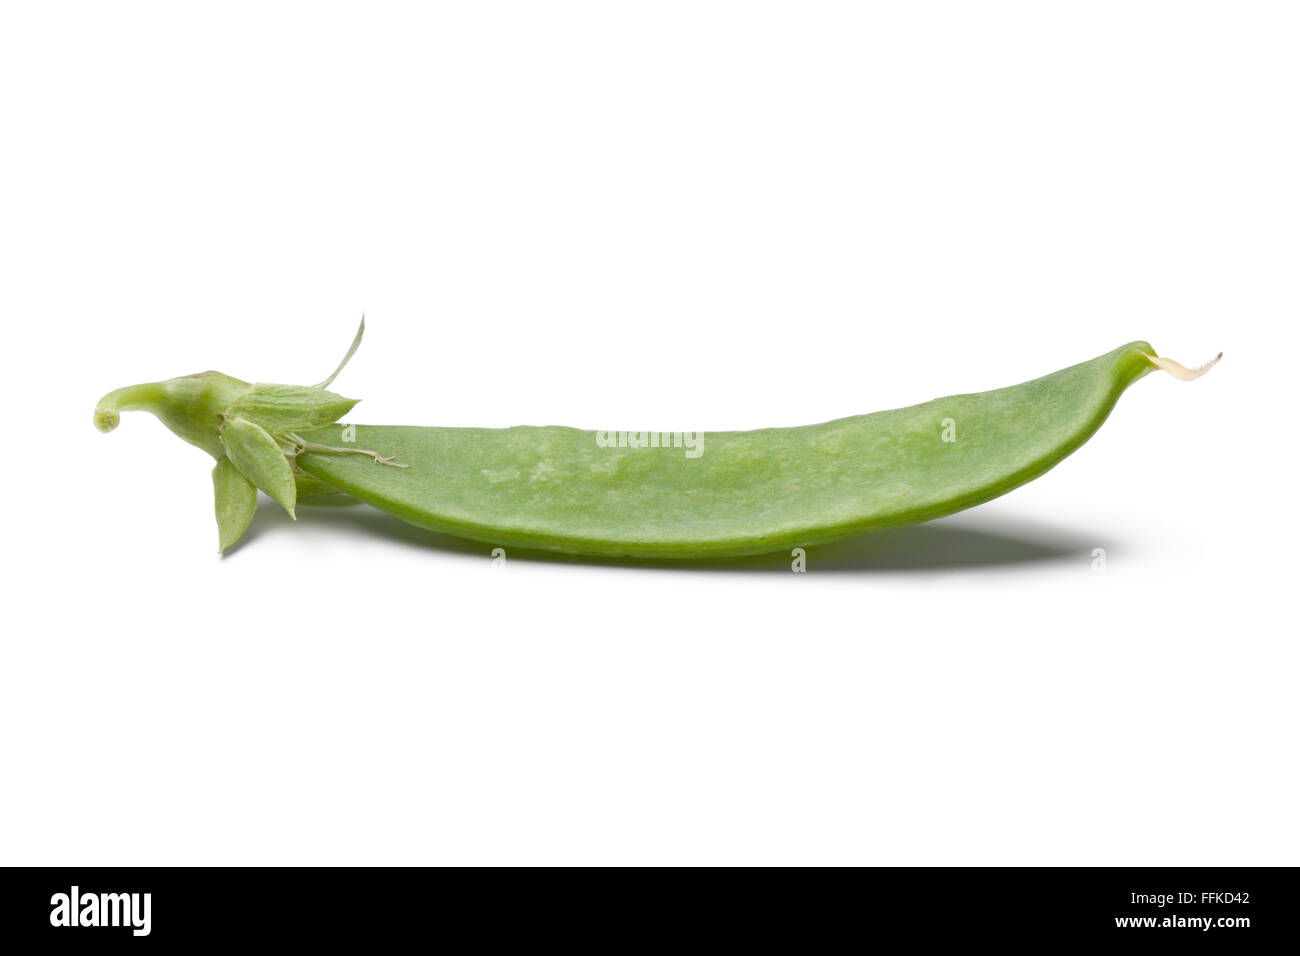 Whole single fresh green Sugar snap pea on white background Stock Photo